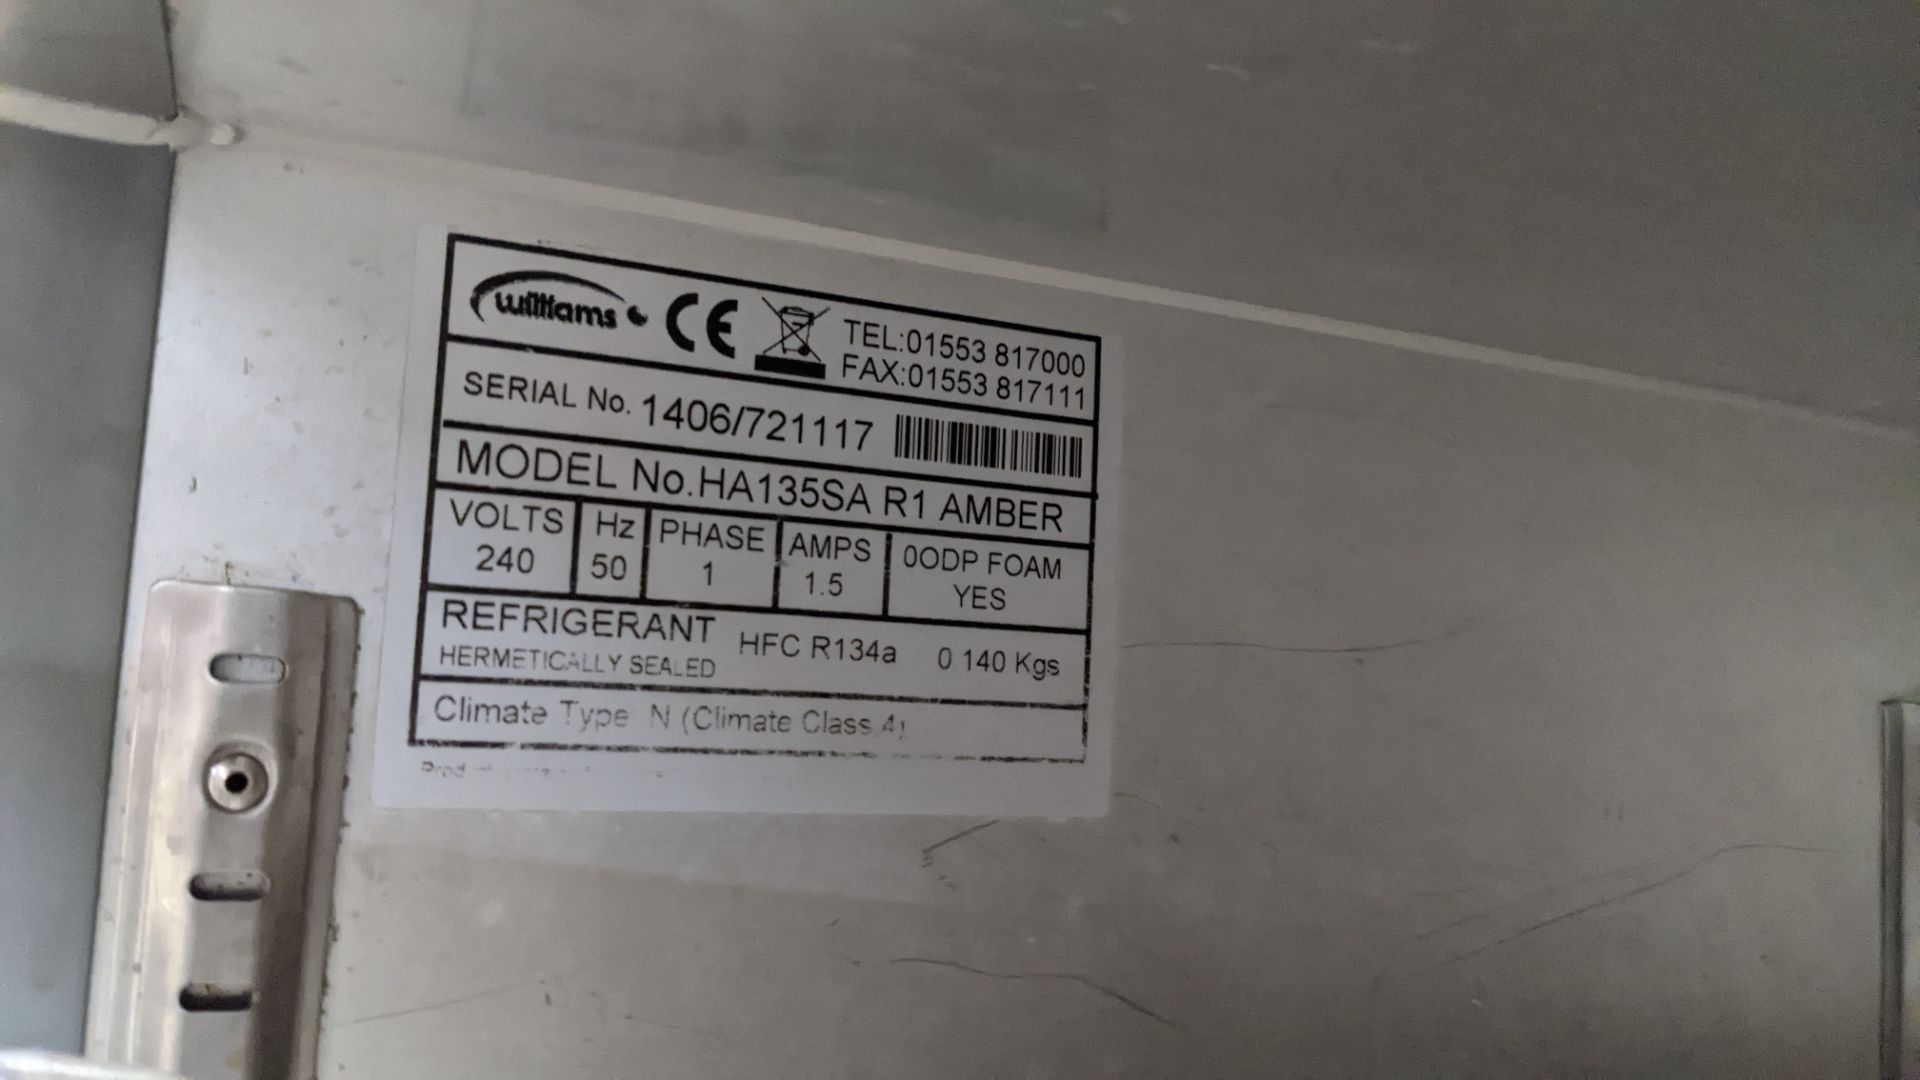 Williams HA135SA stainless steel undercounter fridge - Image 5 of 5